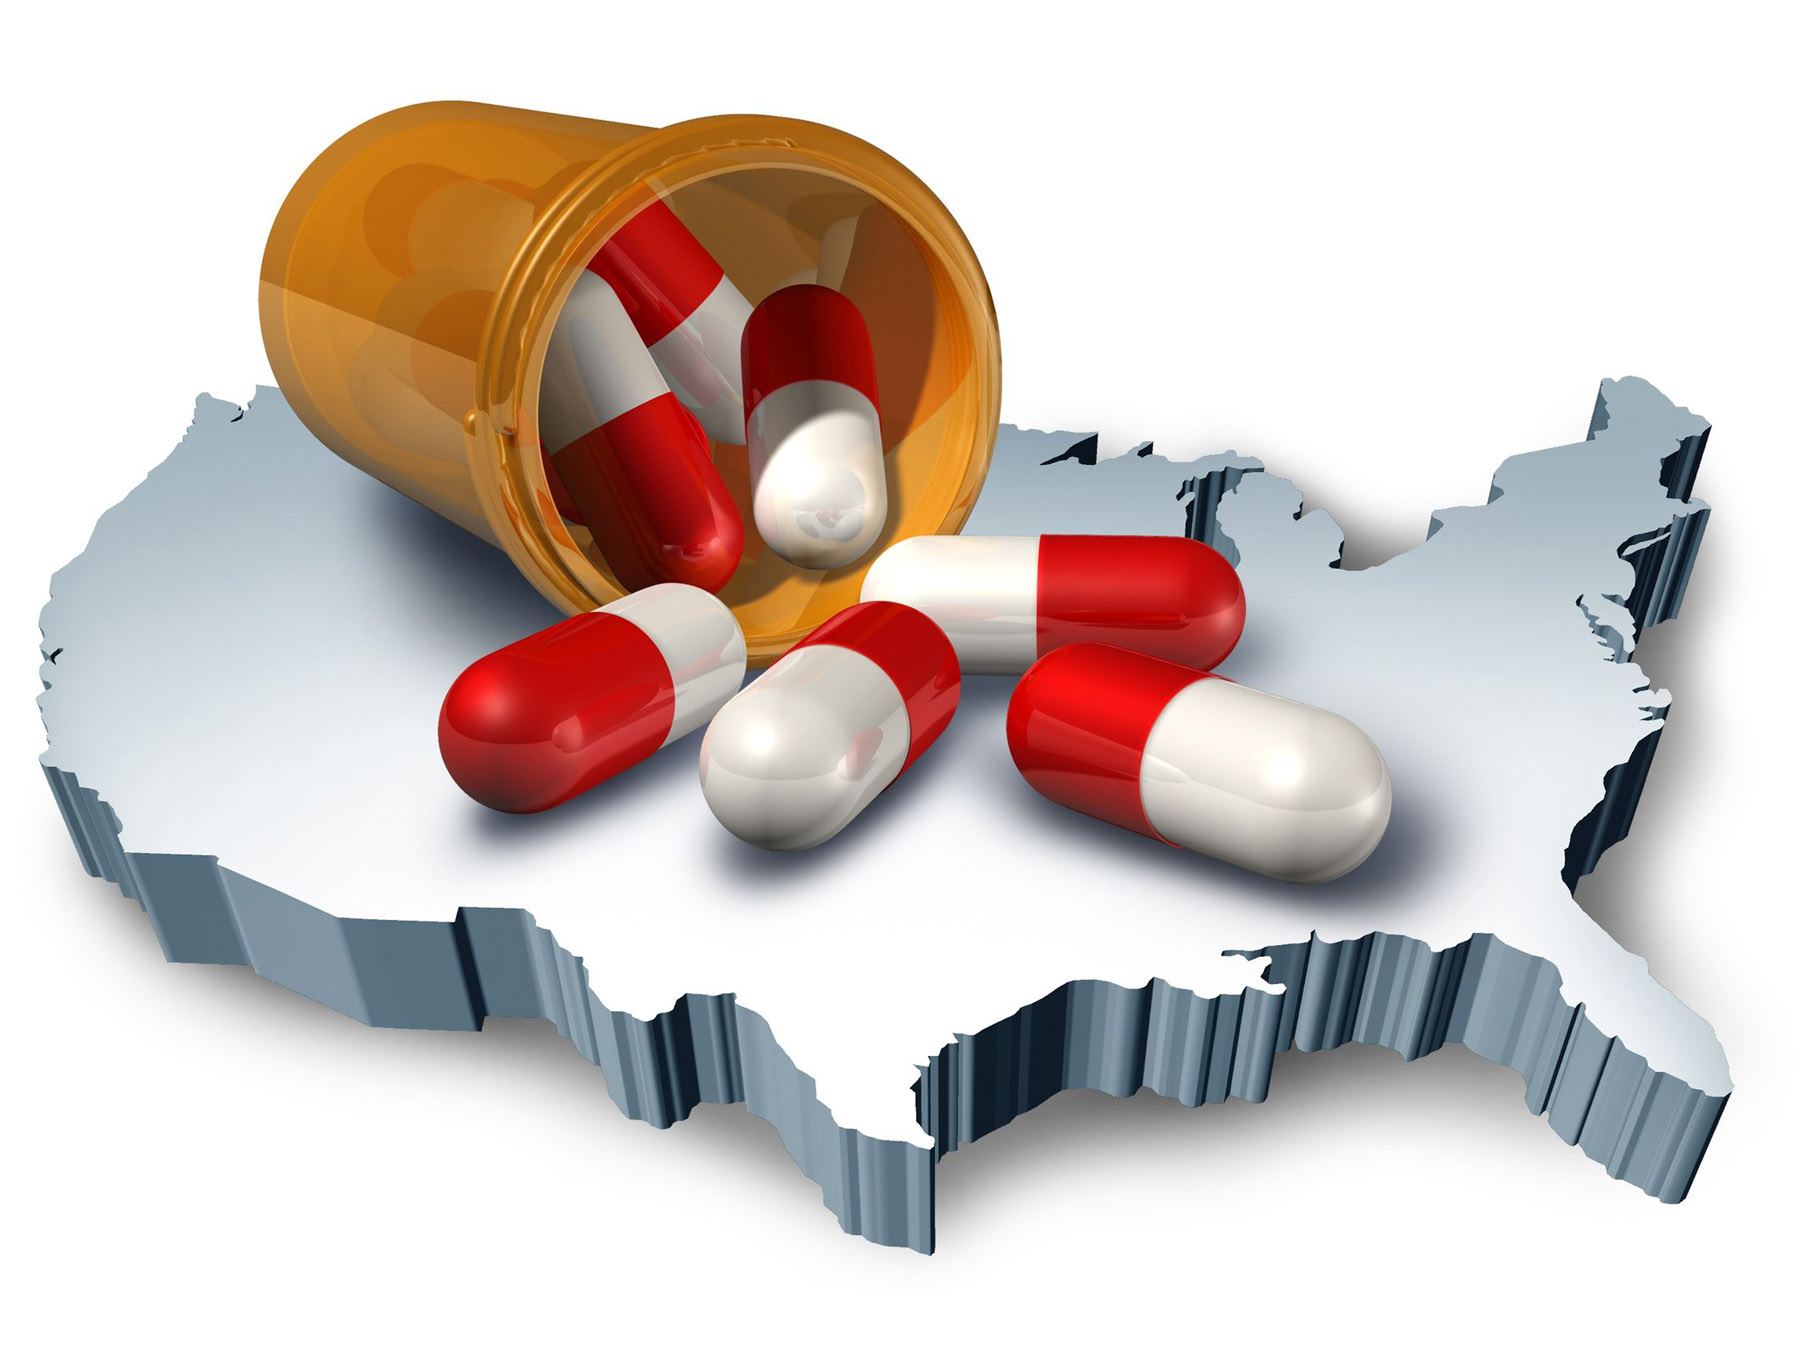 US prescription drug spending rose 13 percent in 2014: IMS report